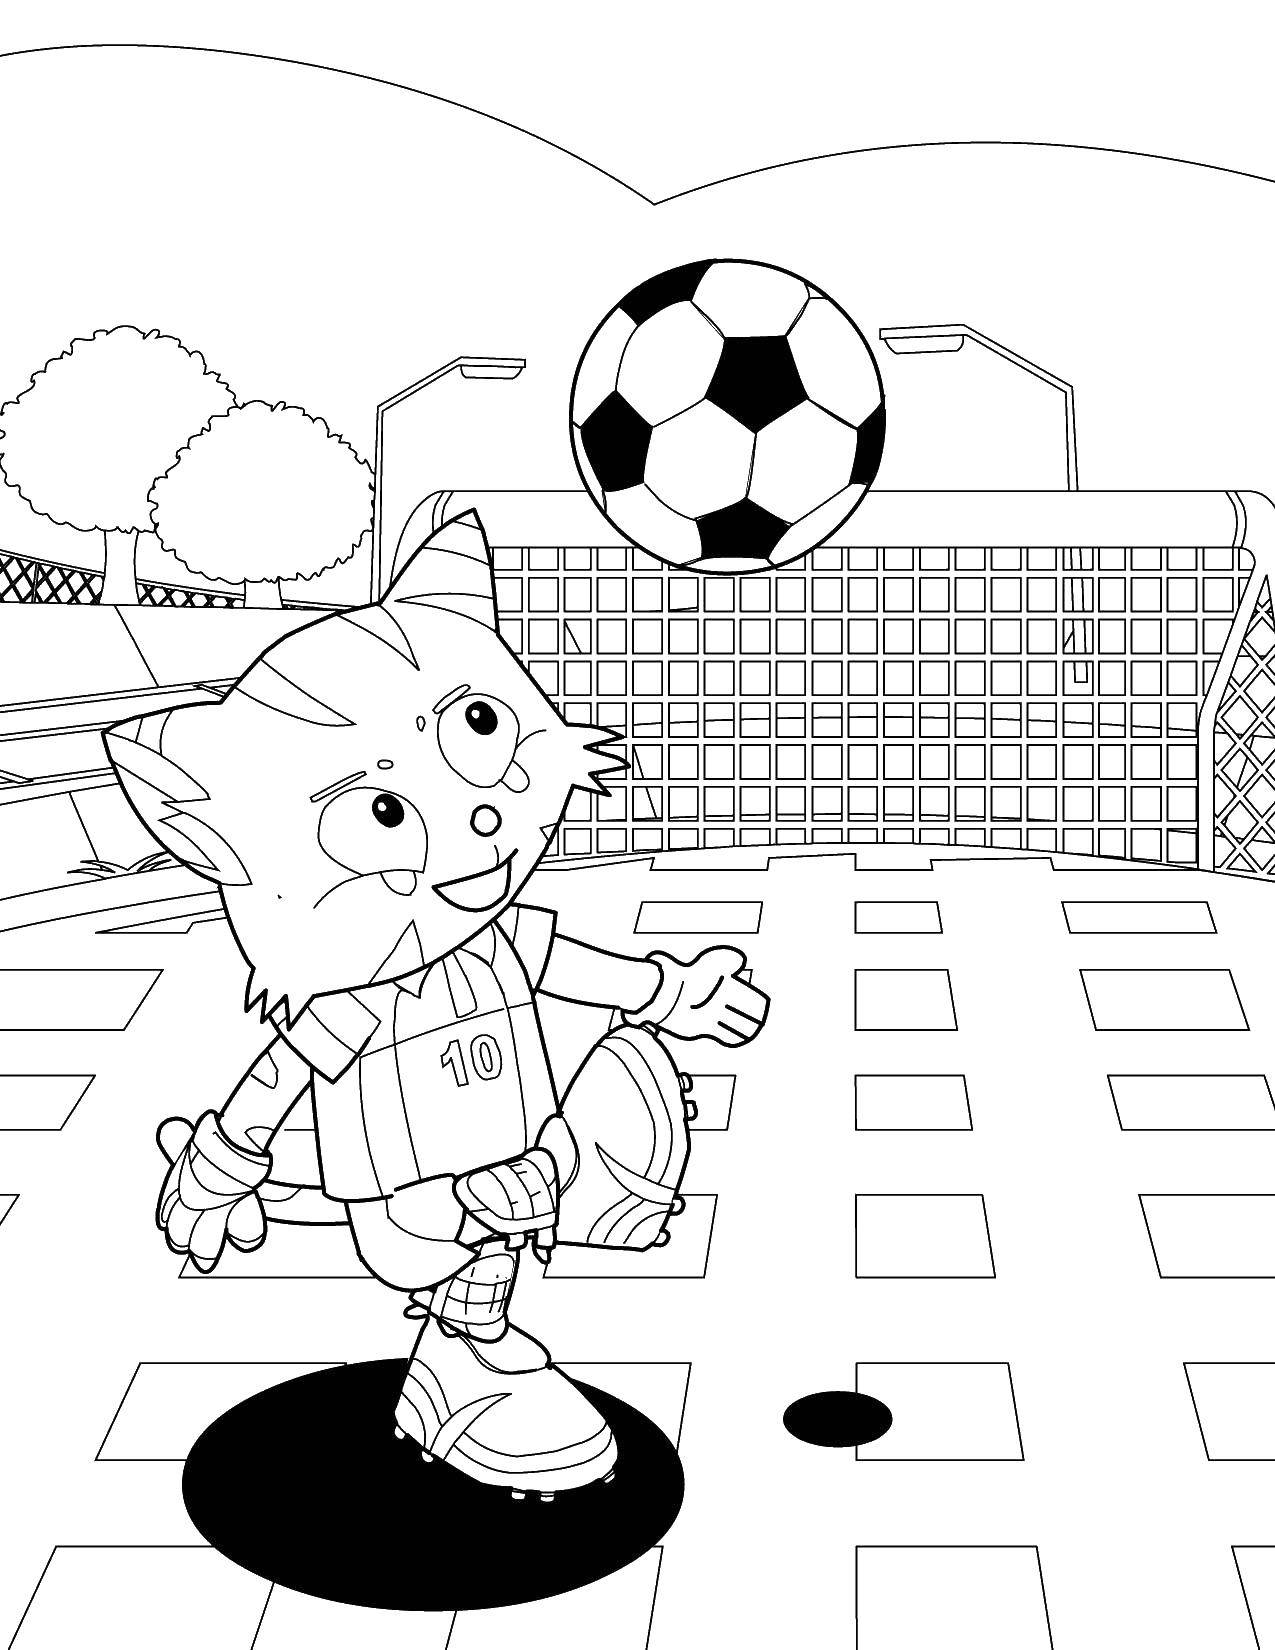 Название: Раскраска Котик играет в футбол. Категория: Футбол. Теги: футбол, спорт, котик.